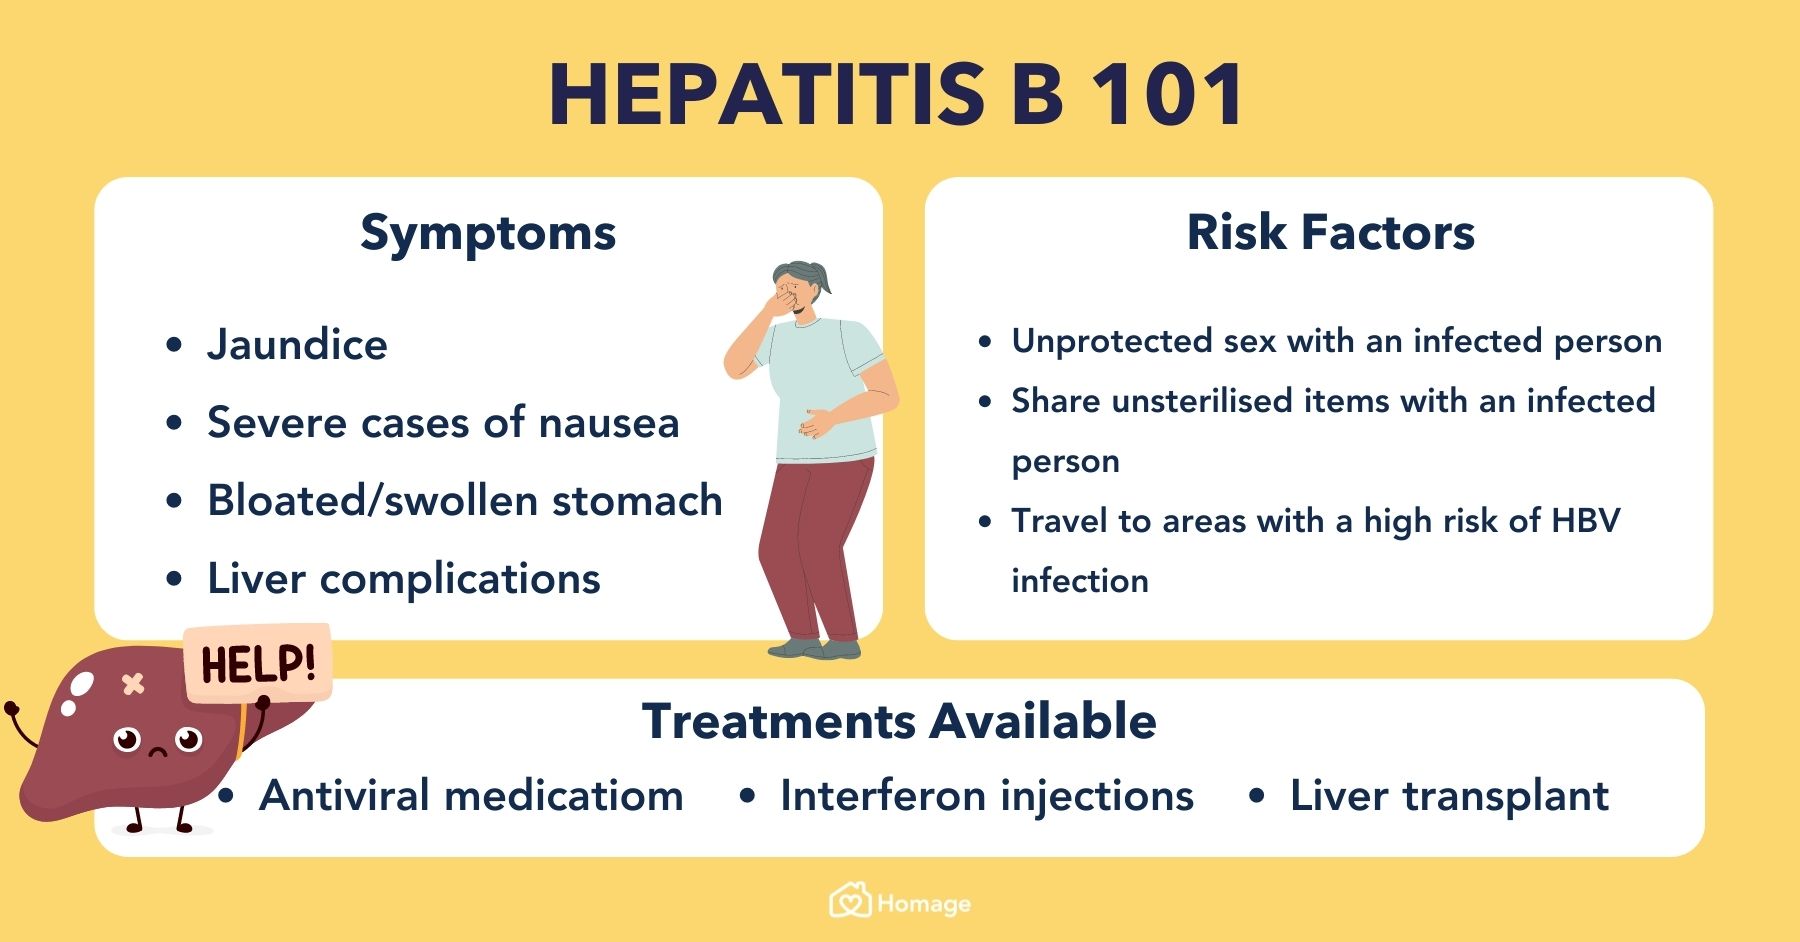 Hepatitis B symptoms, risk factors and treatment options